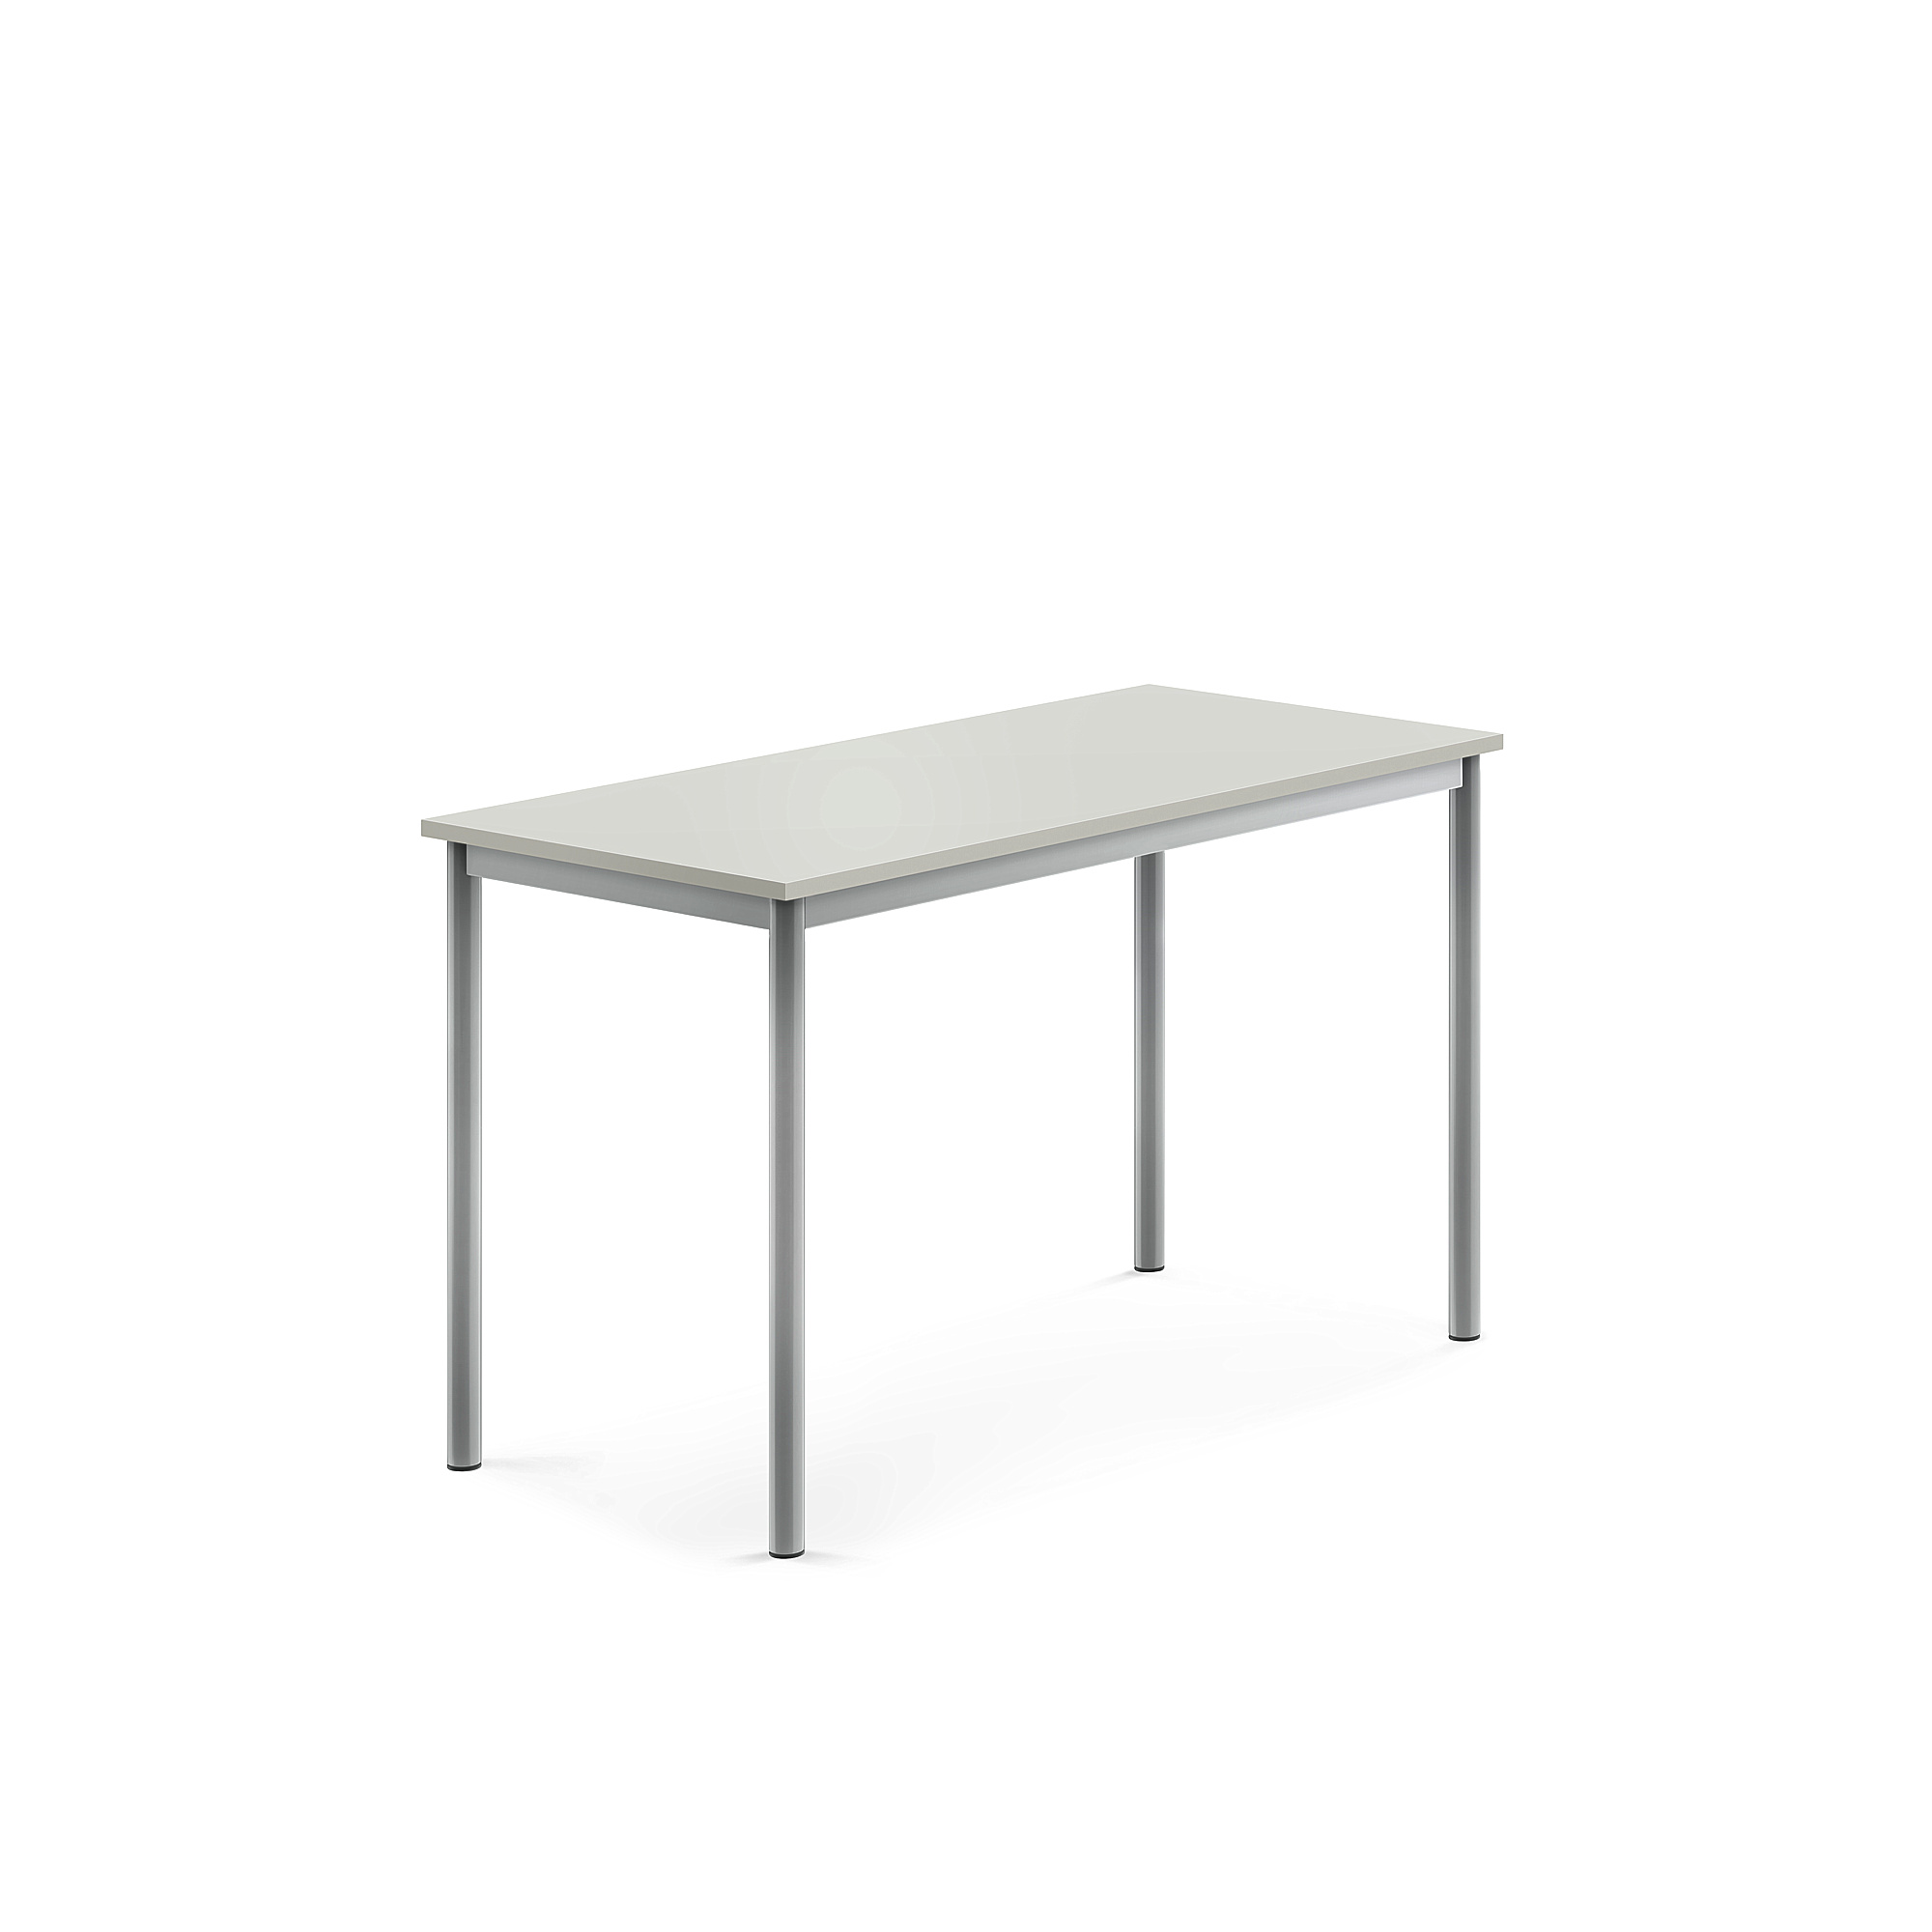 Stůl SONITUS, 1200x600x720 mm, stříbrné nohy, HPL deska tlumící hluk, šedá